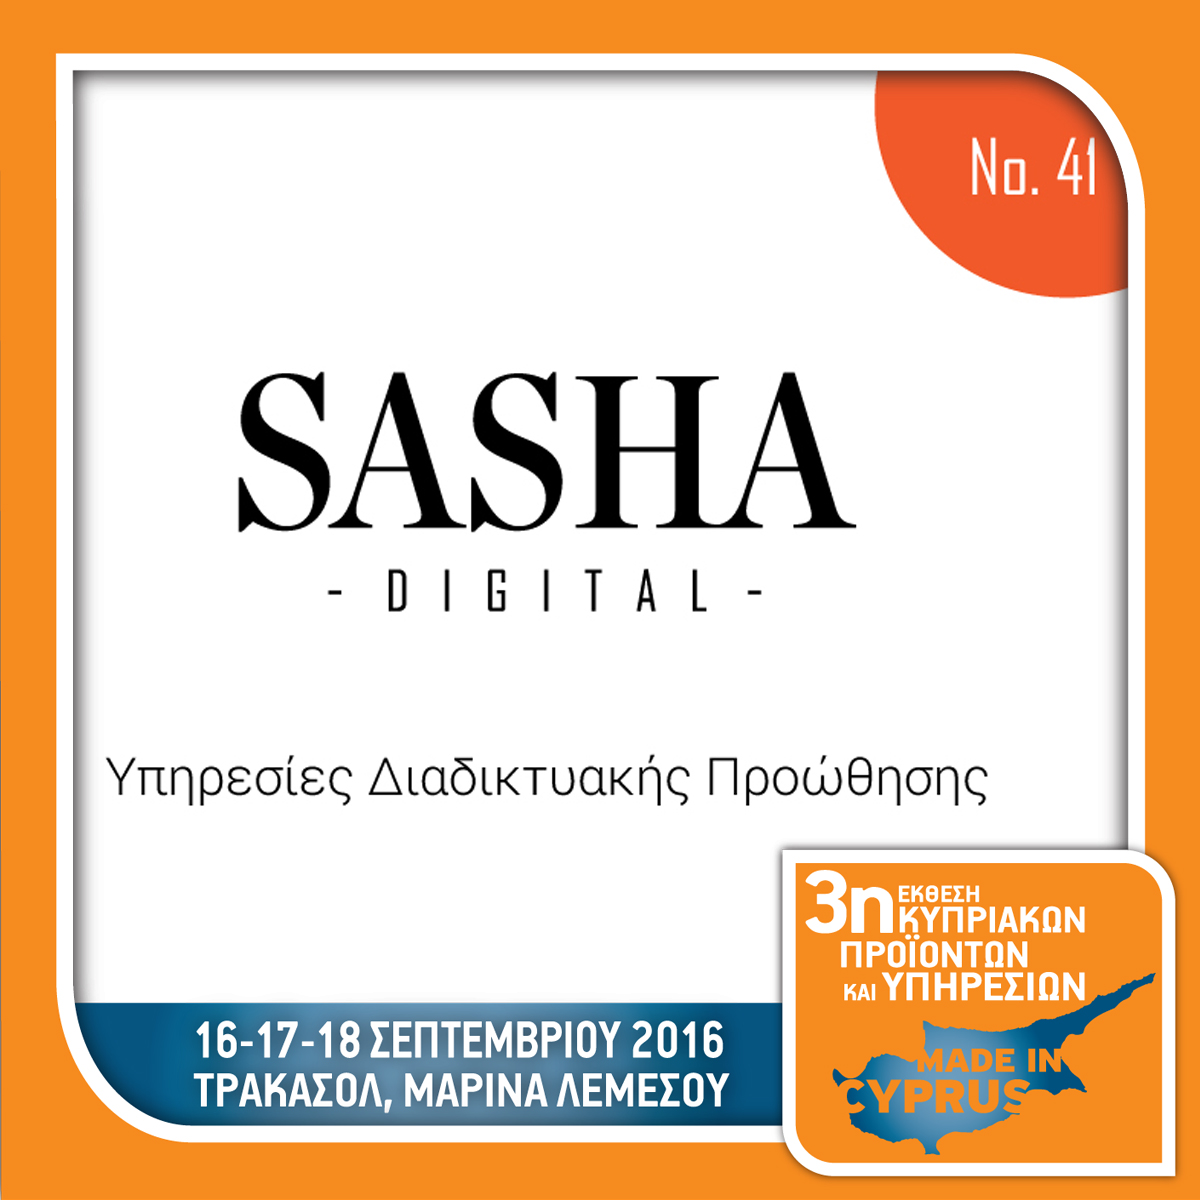 Sasha Digital - Booth No 41